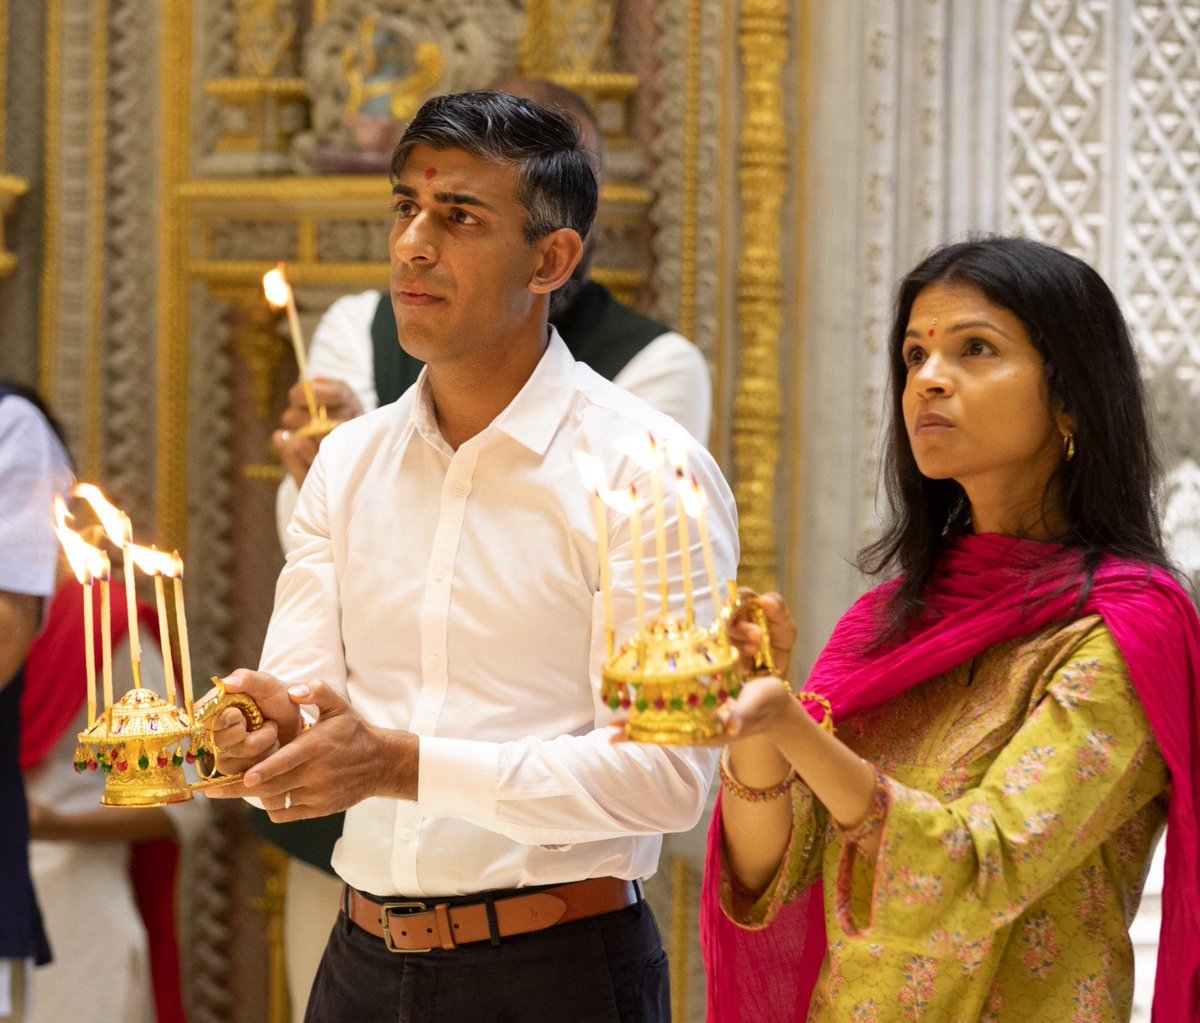 सनातन धर्म ही सर्वश्रेष्ठ है !! 🙏♥️

' Akshardham Mandir ' ✨️♥️

Akshardham Temple is a famous Hindu Mandir complex located in Delhi, Bharat.  It is officially known as 'Swaminarayan Akshardham Temple' and is dedicated to Bhagwan Swaminarayan. 

#AkshardhamTemple 
#G20Bharat